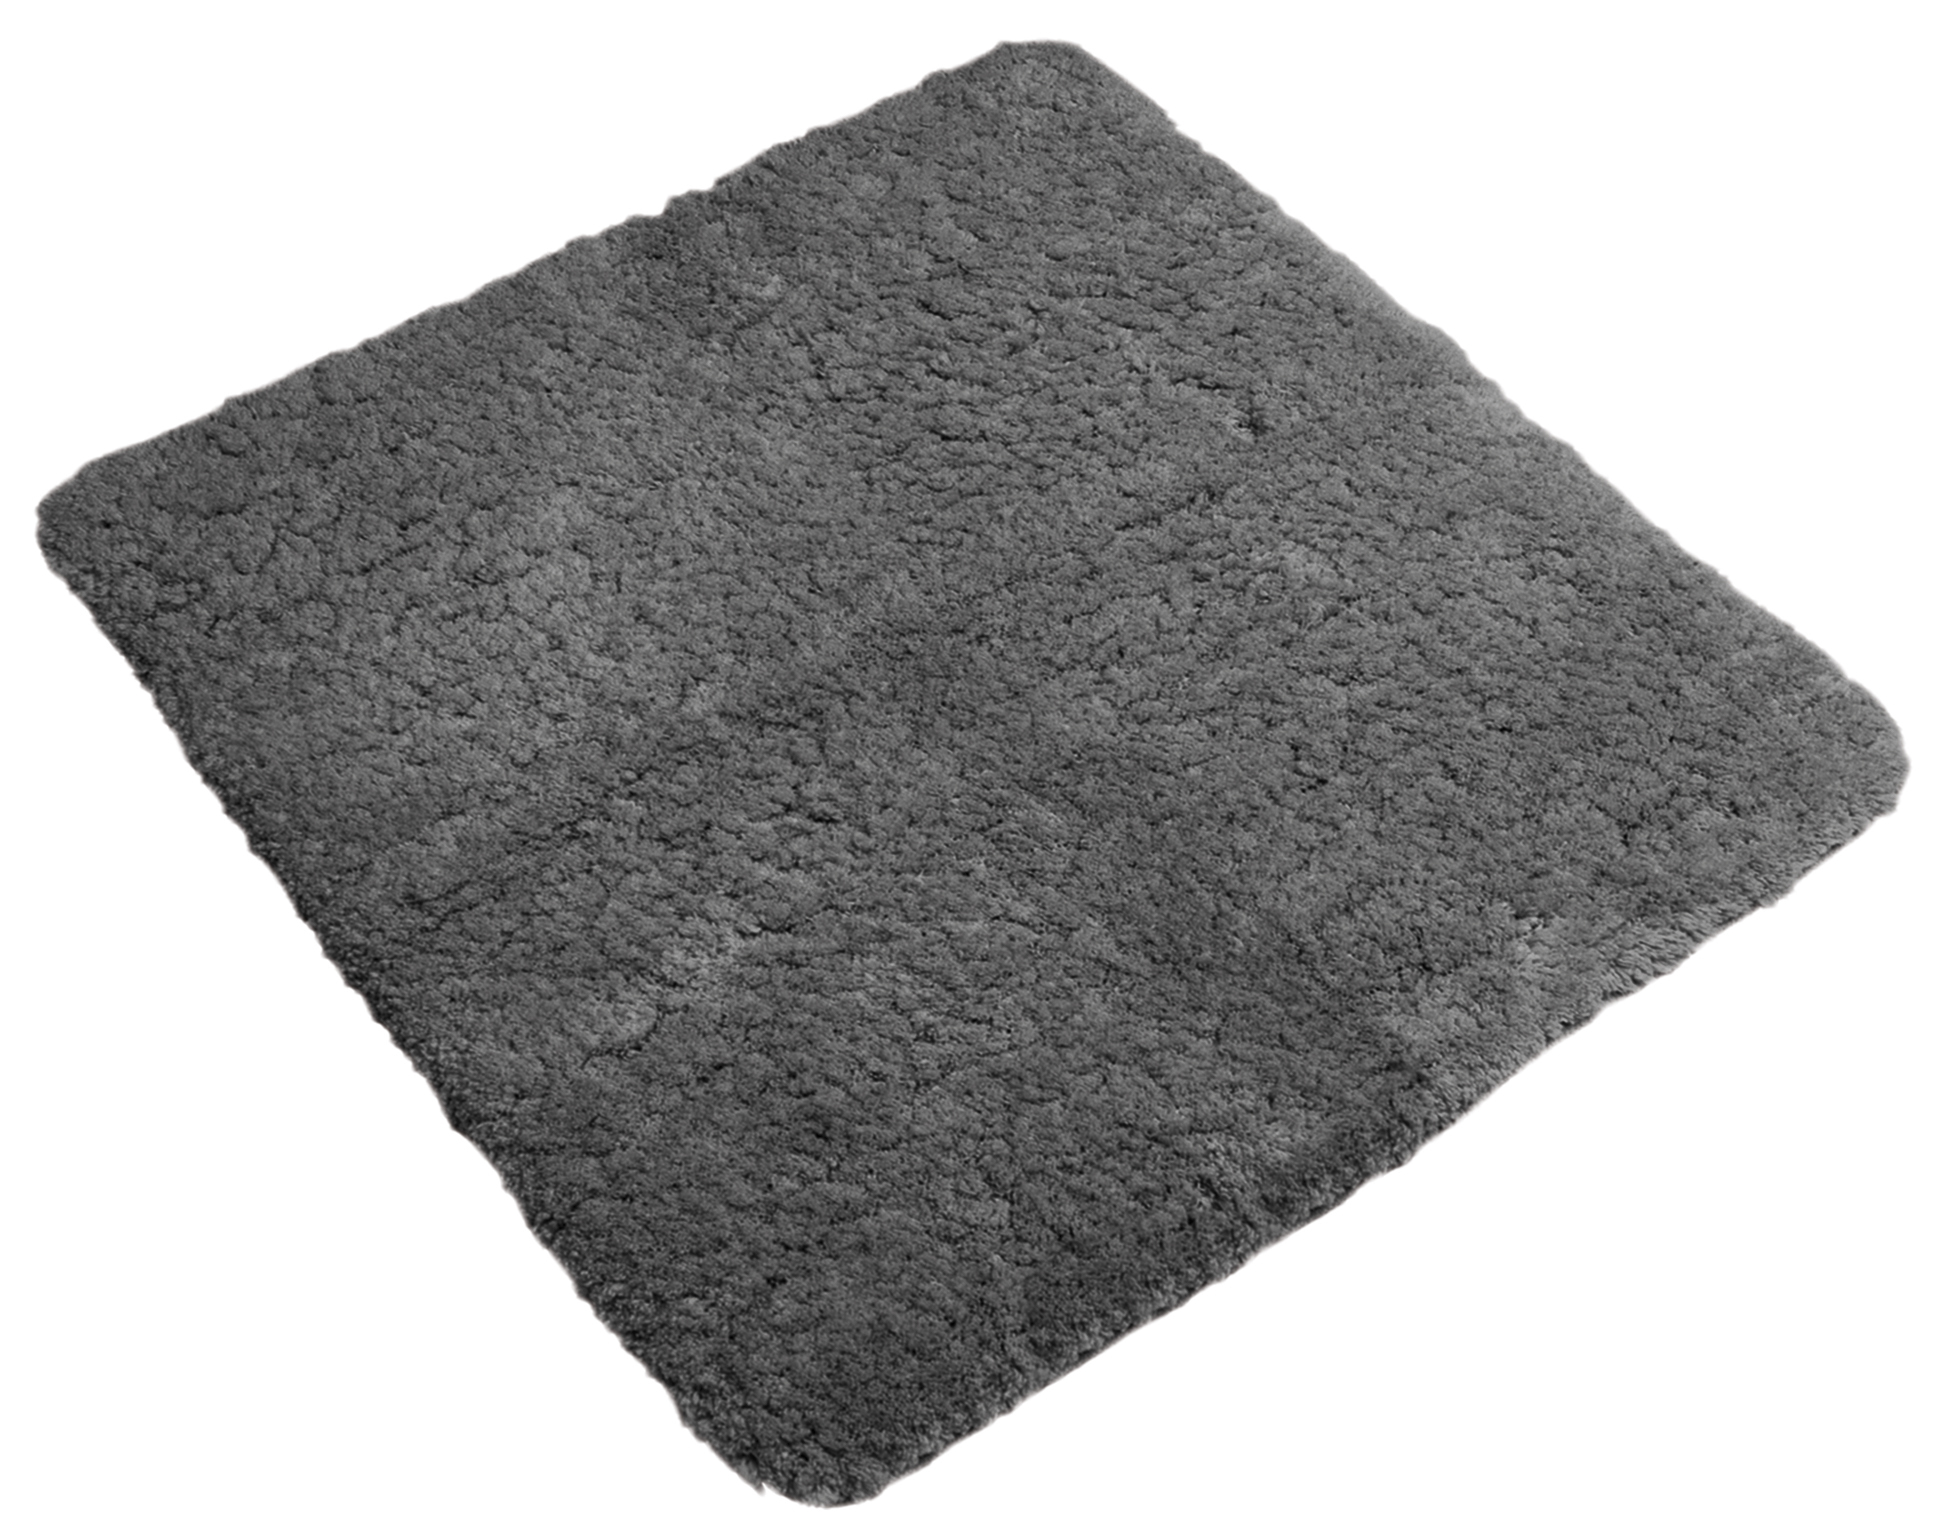 Tapis de bain microfiber antislip 60x60 gris